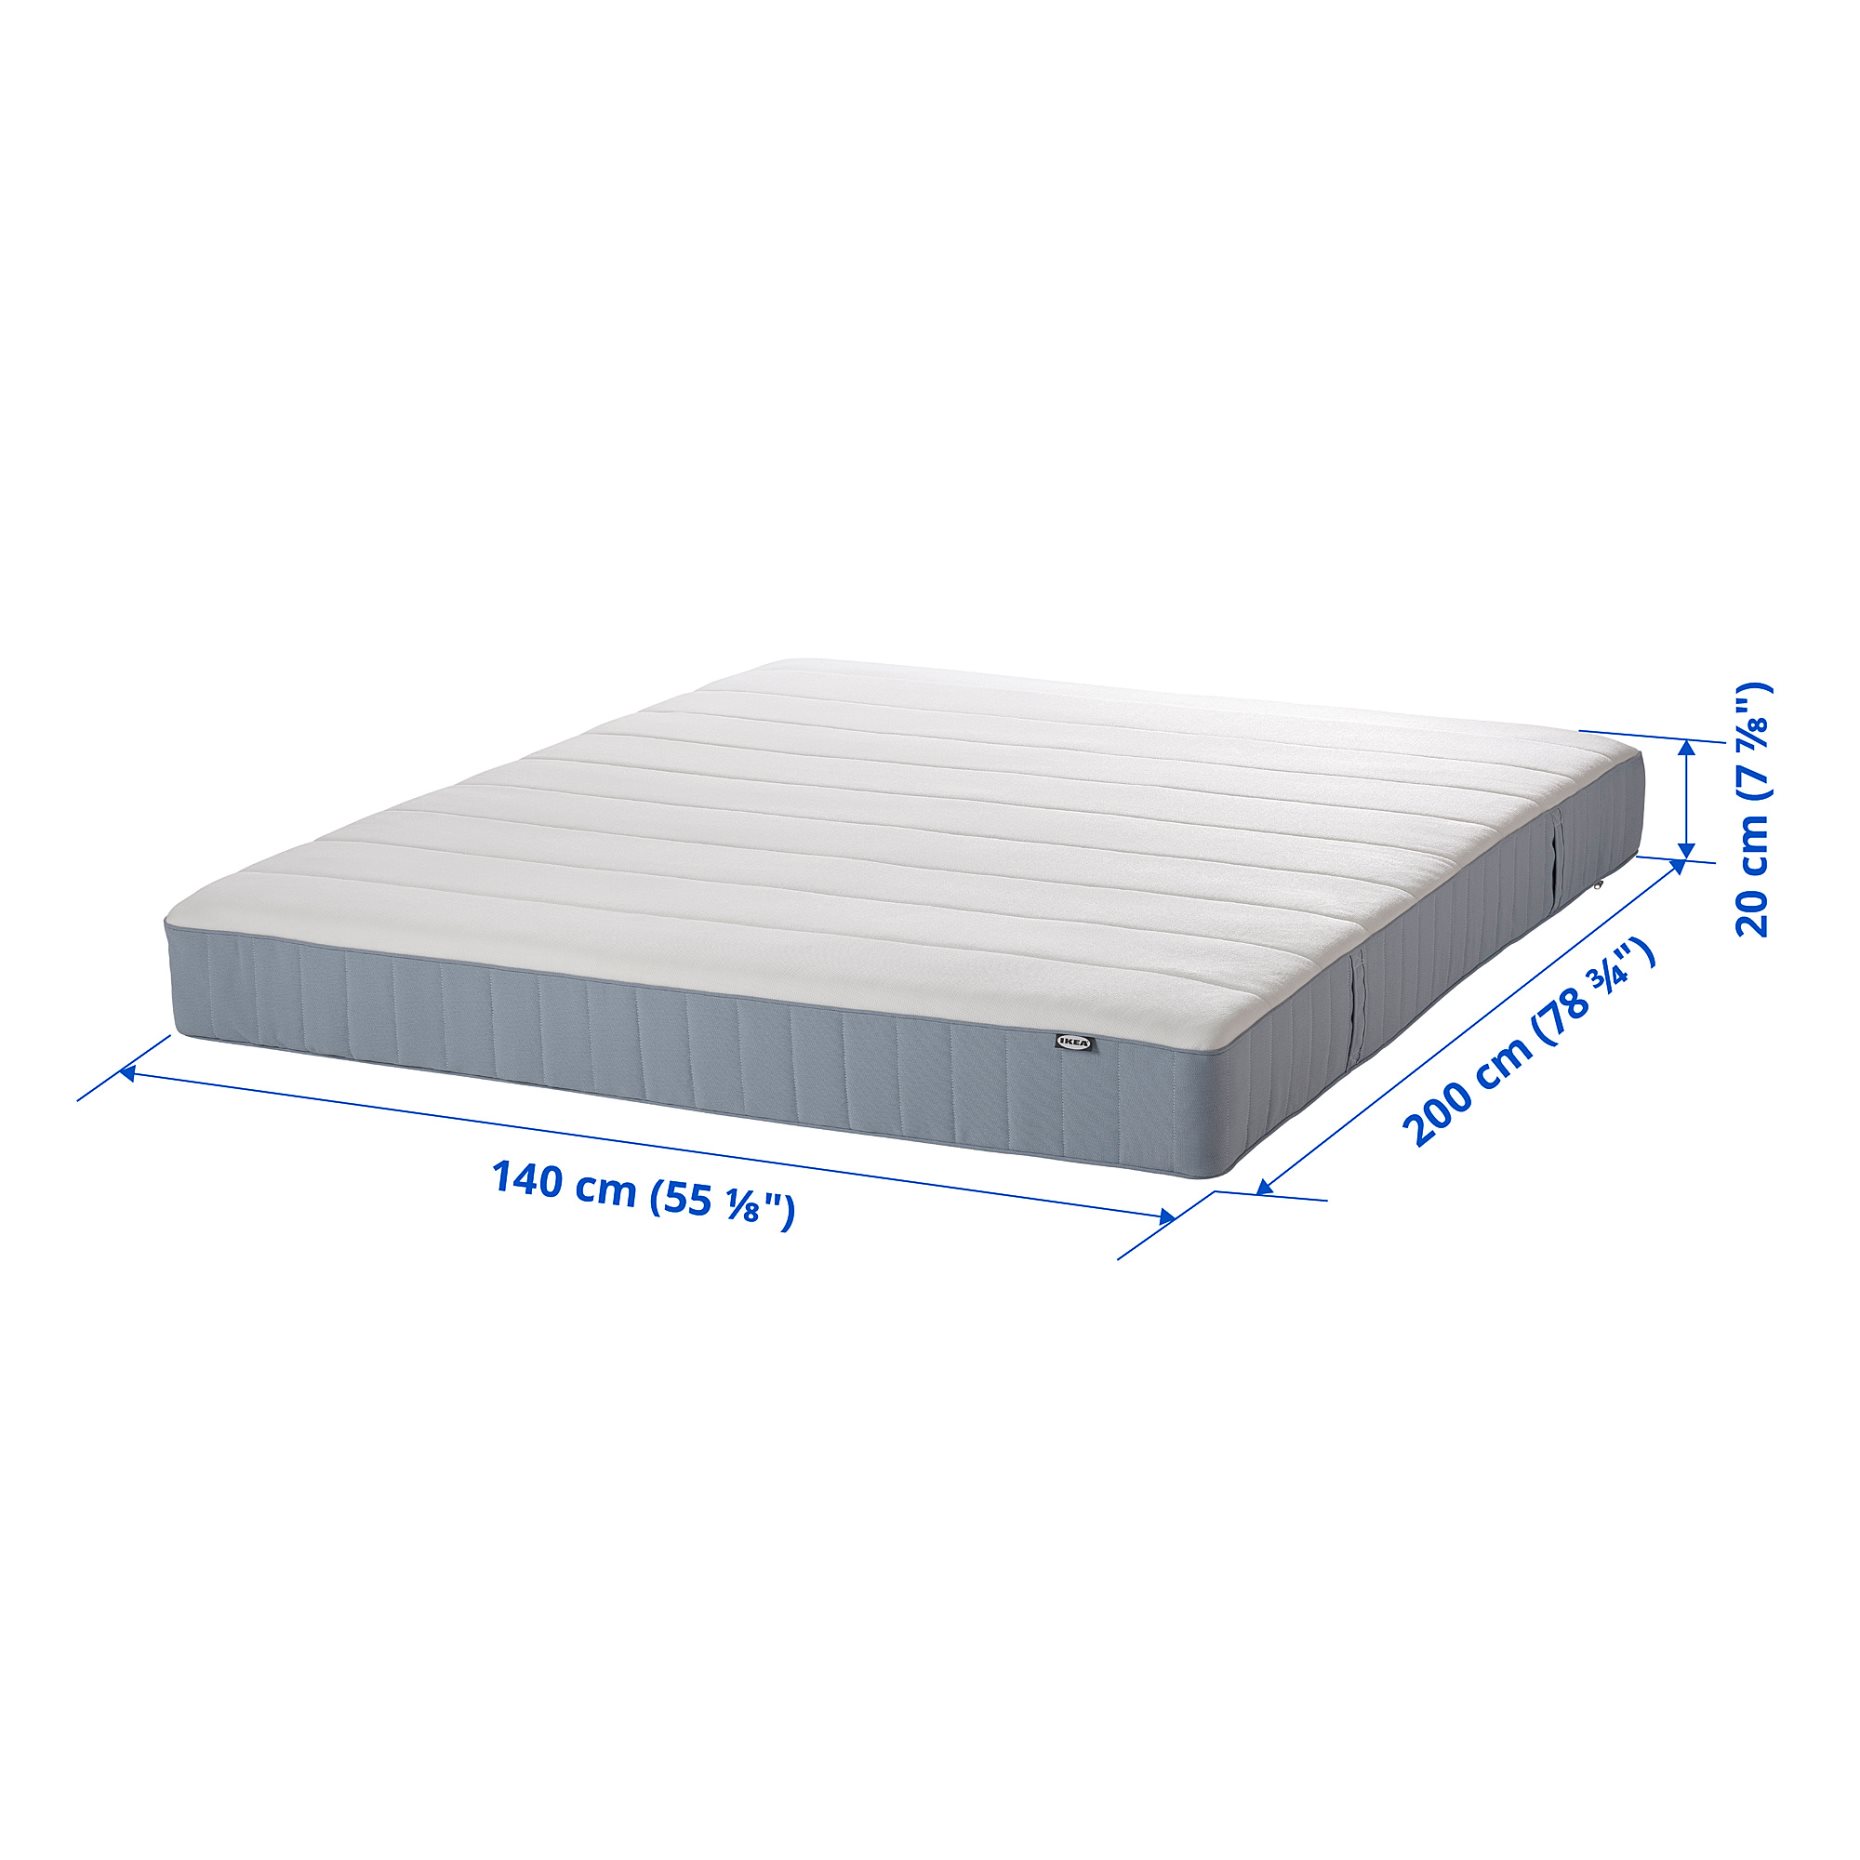 VESTERÖY, pocket sprung mattress/firm, 140x200 cm, 304.506.09